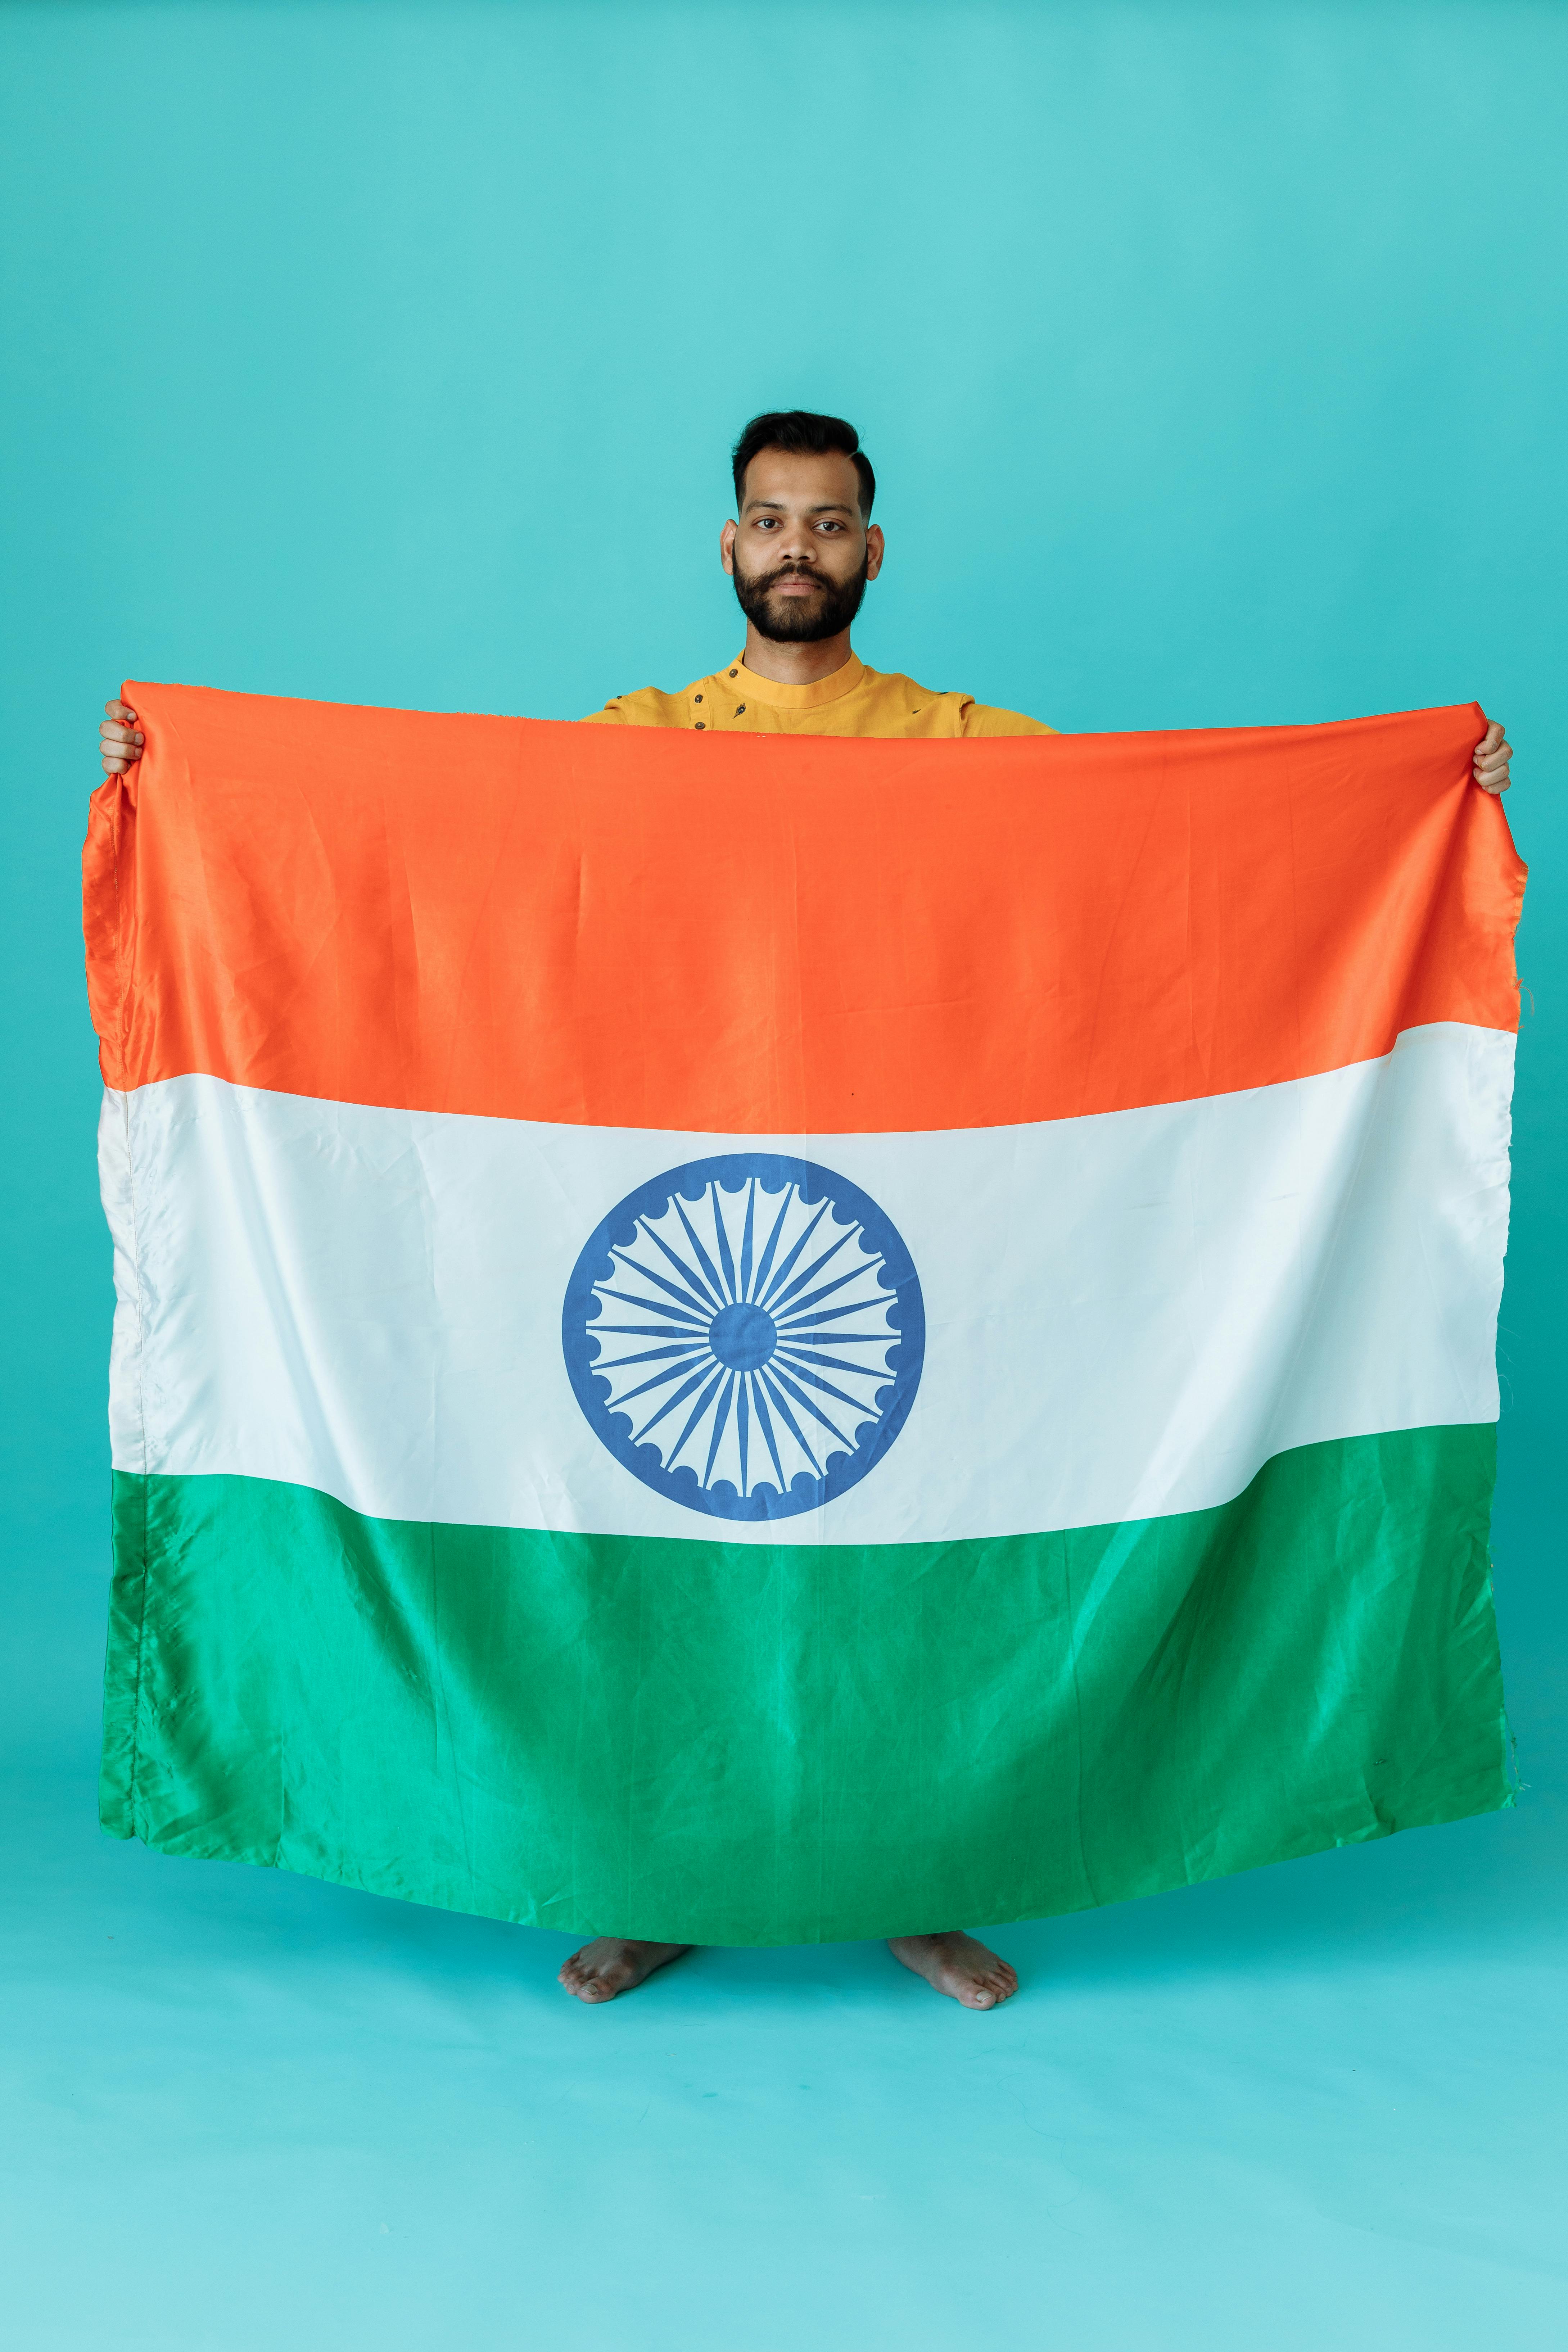 India flag - stock photo 627326 | Crushpixel